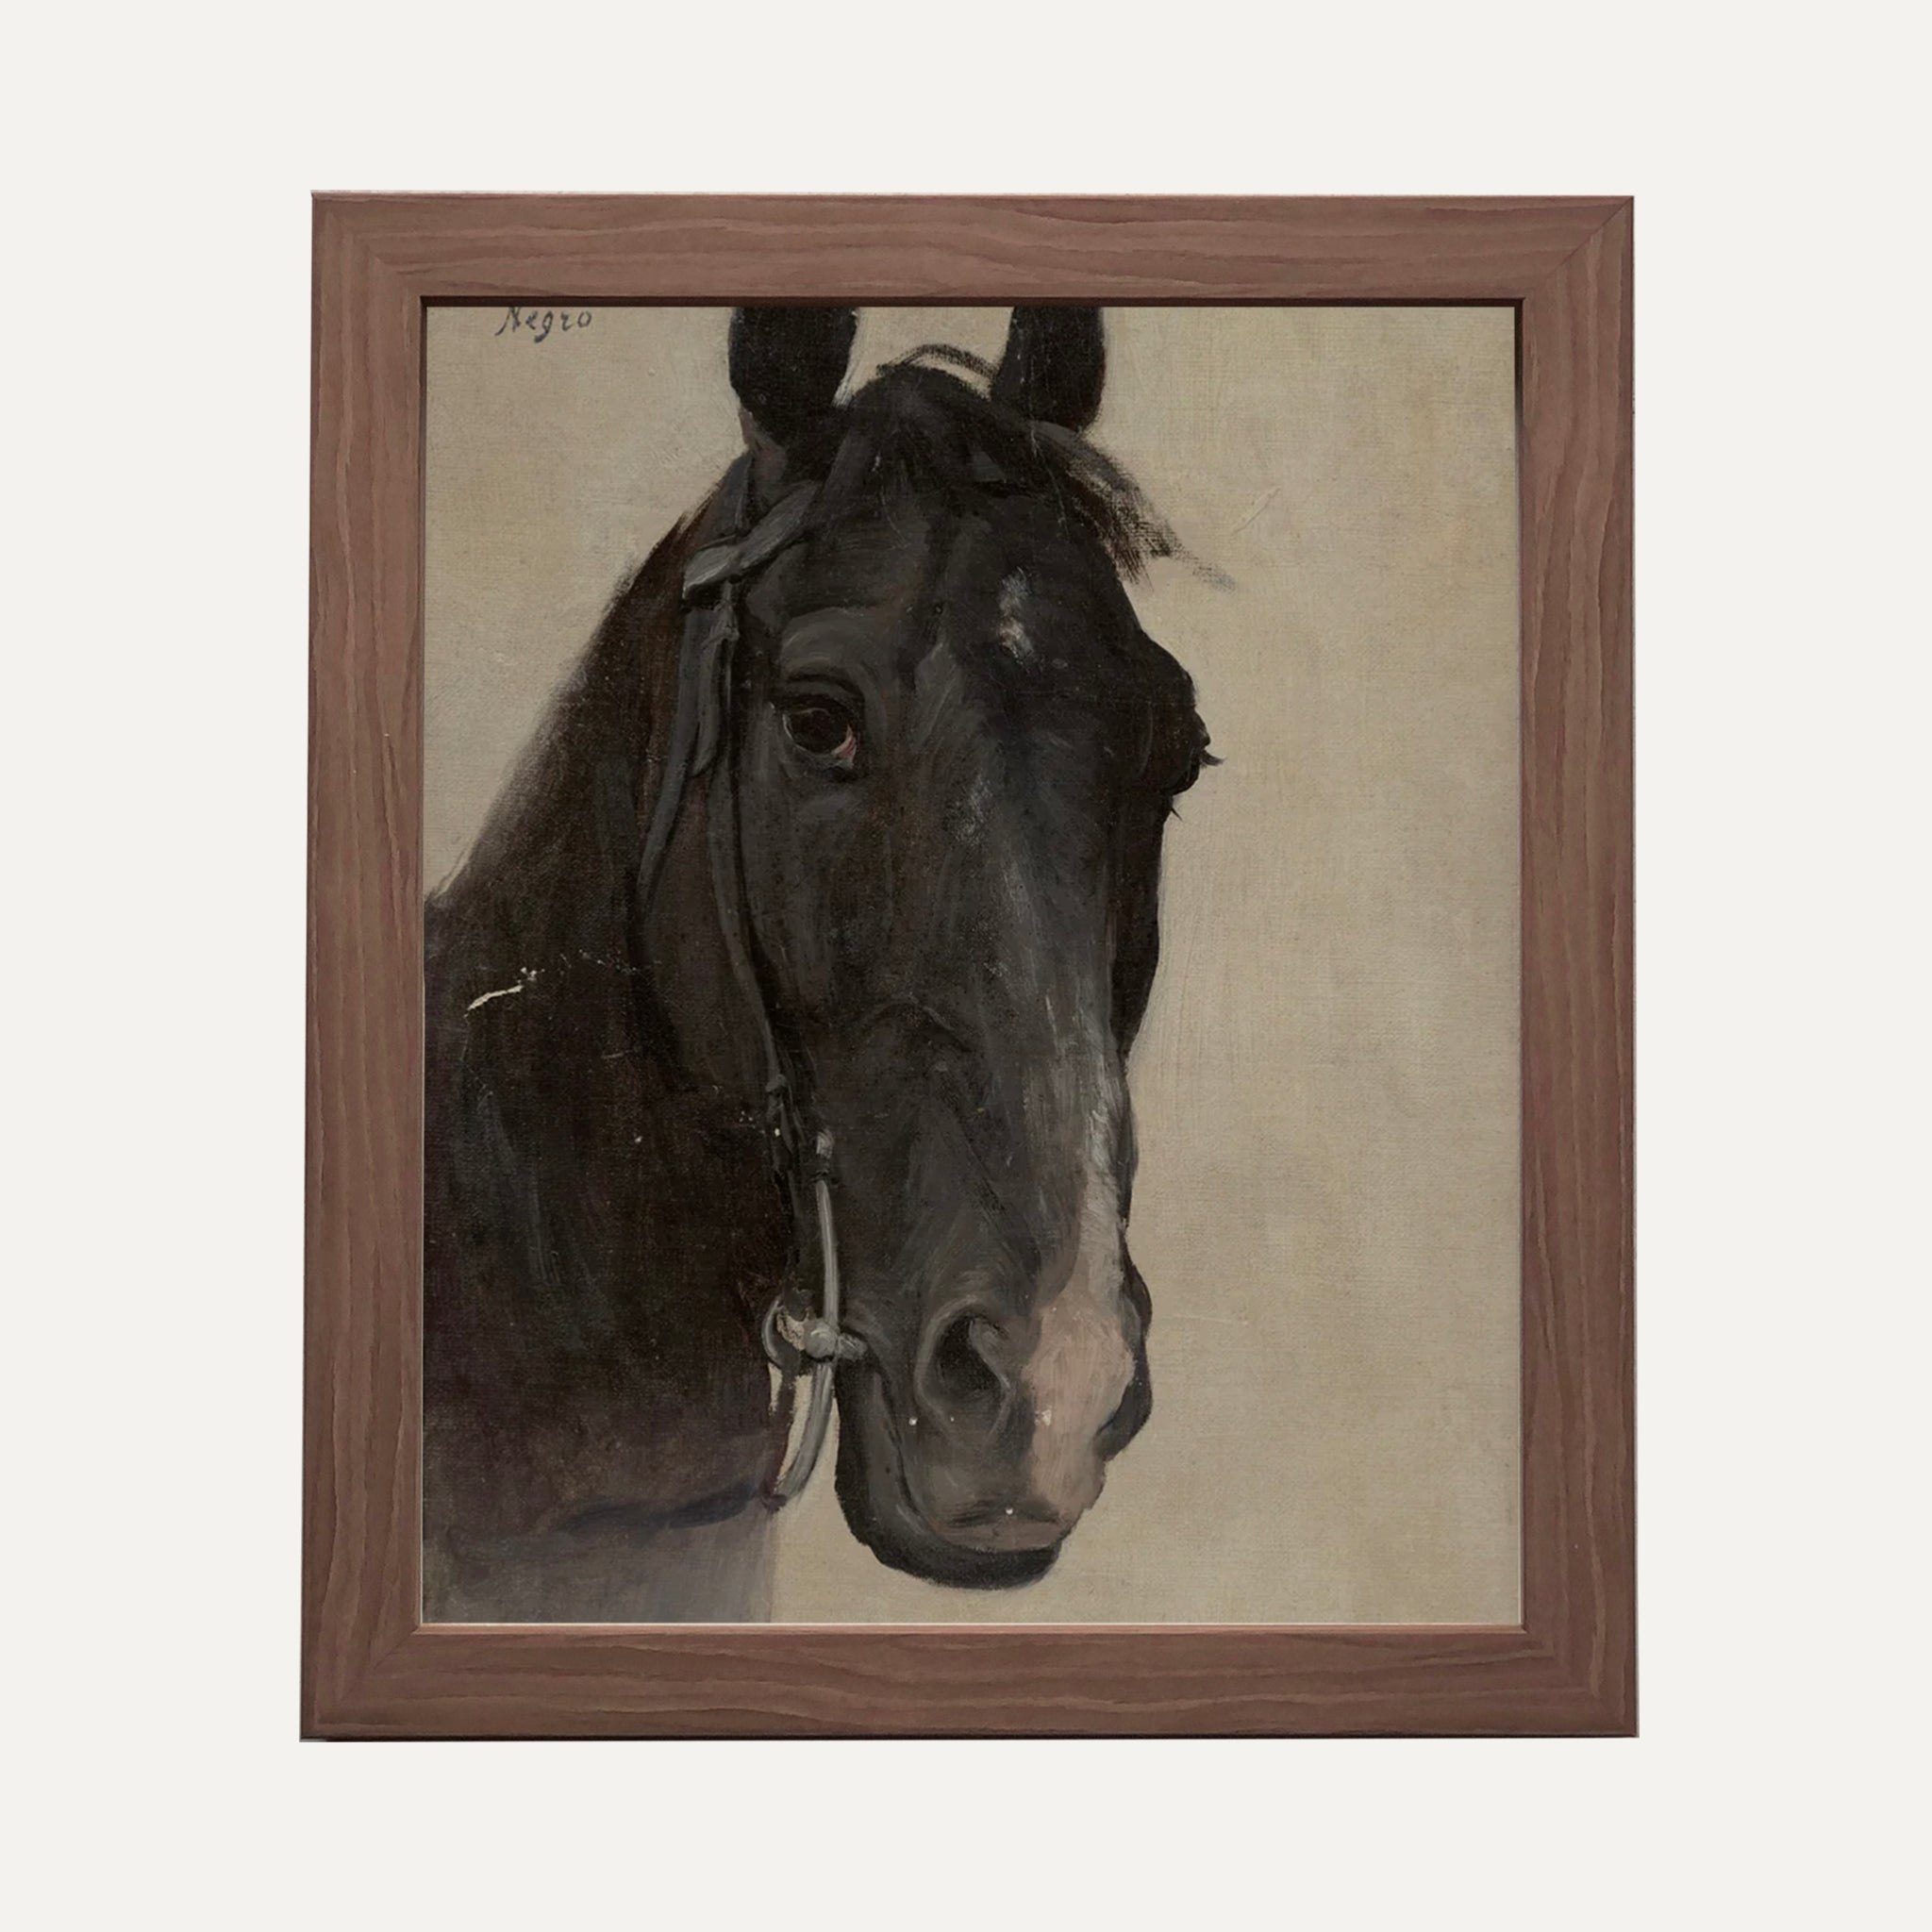 FINE ART PAPER PRINT - THE BLACK HORSE